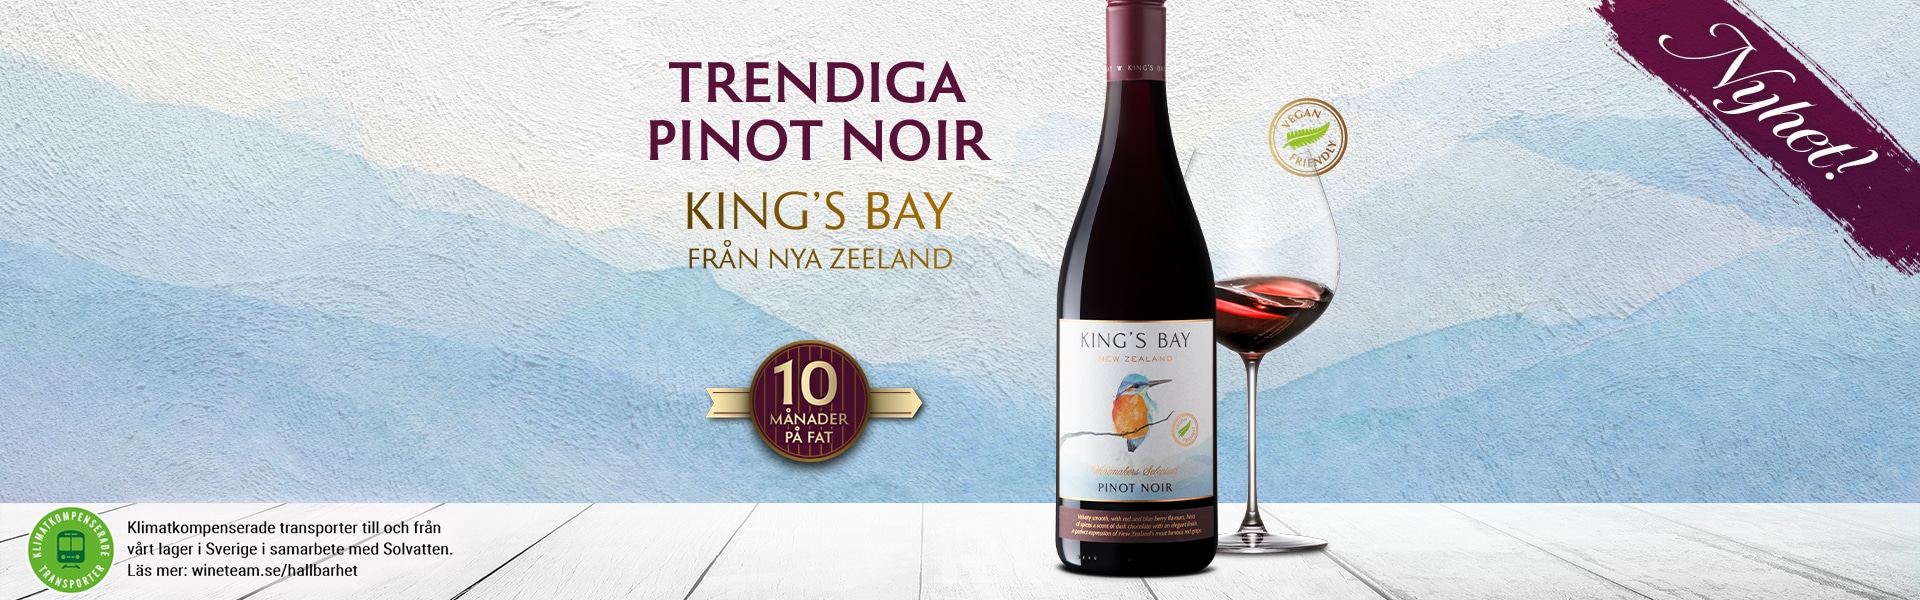 King’s Bay Pinot Noir